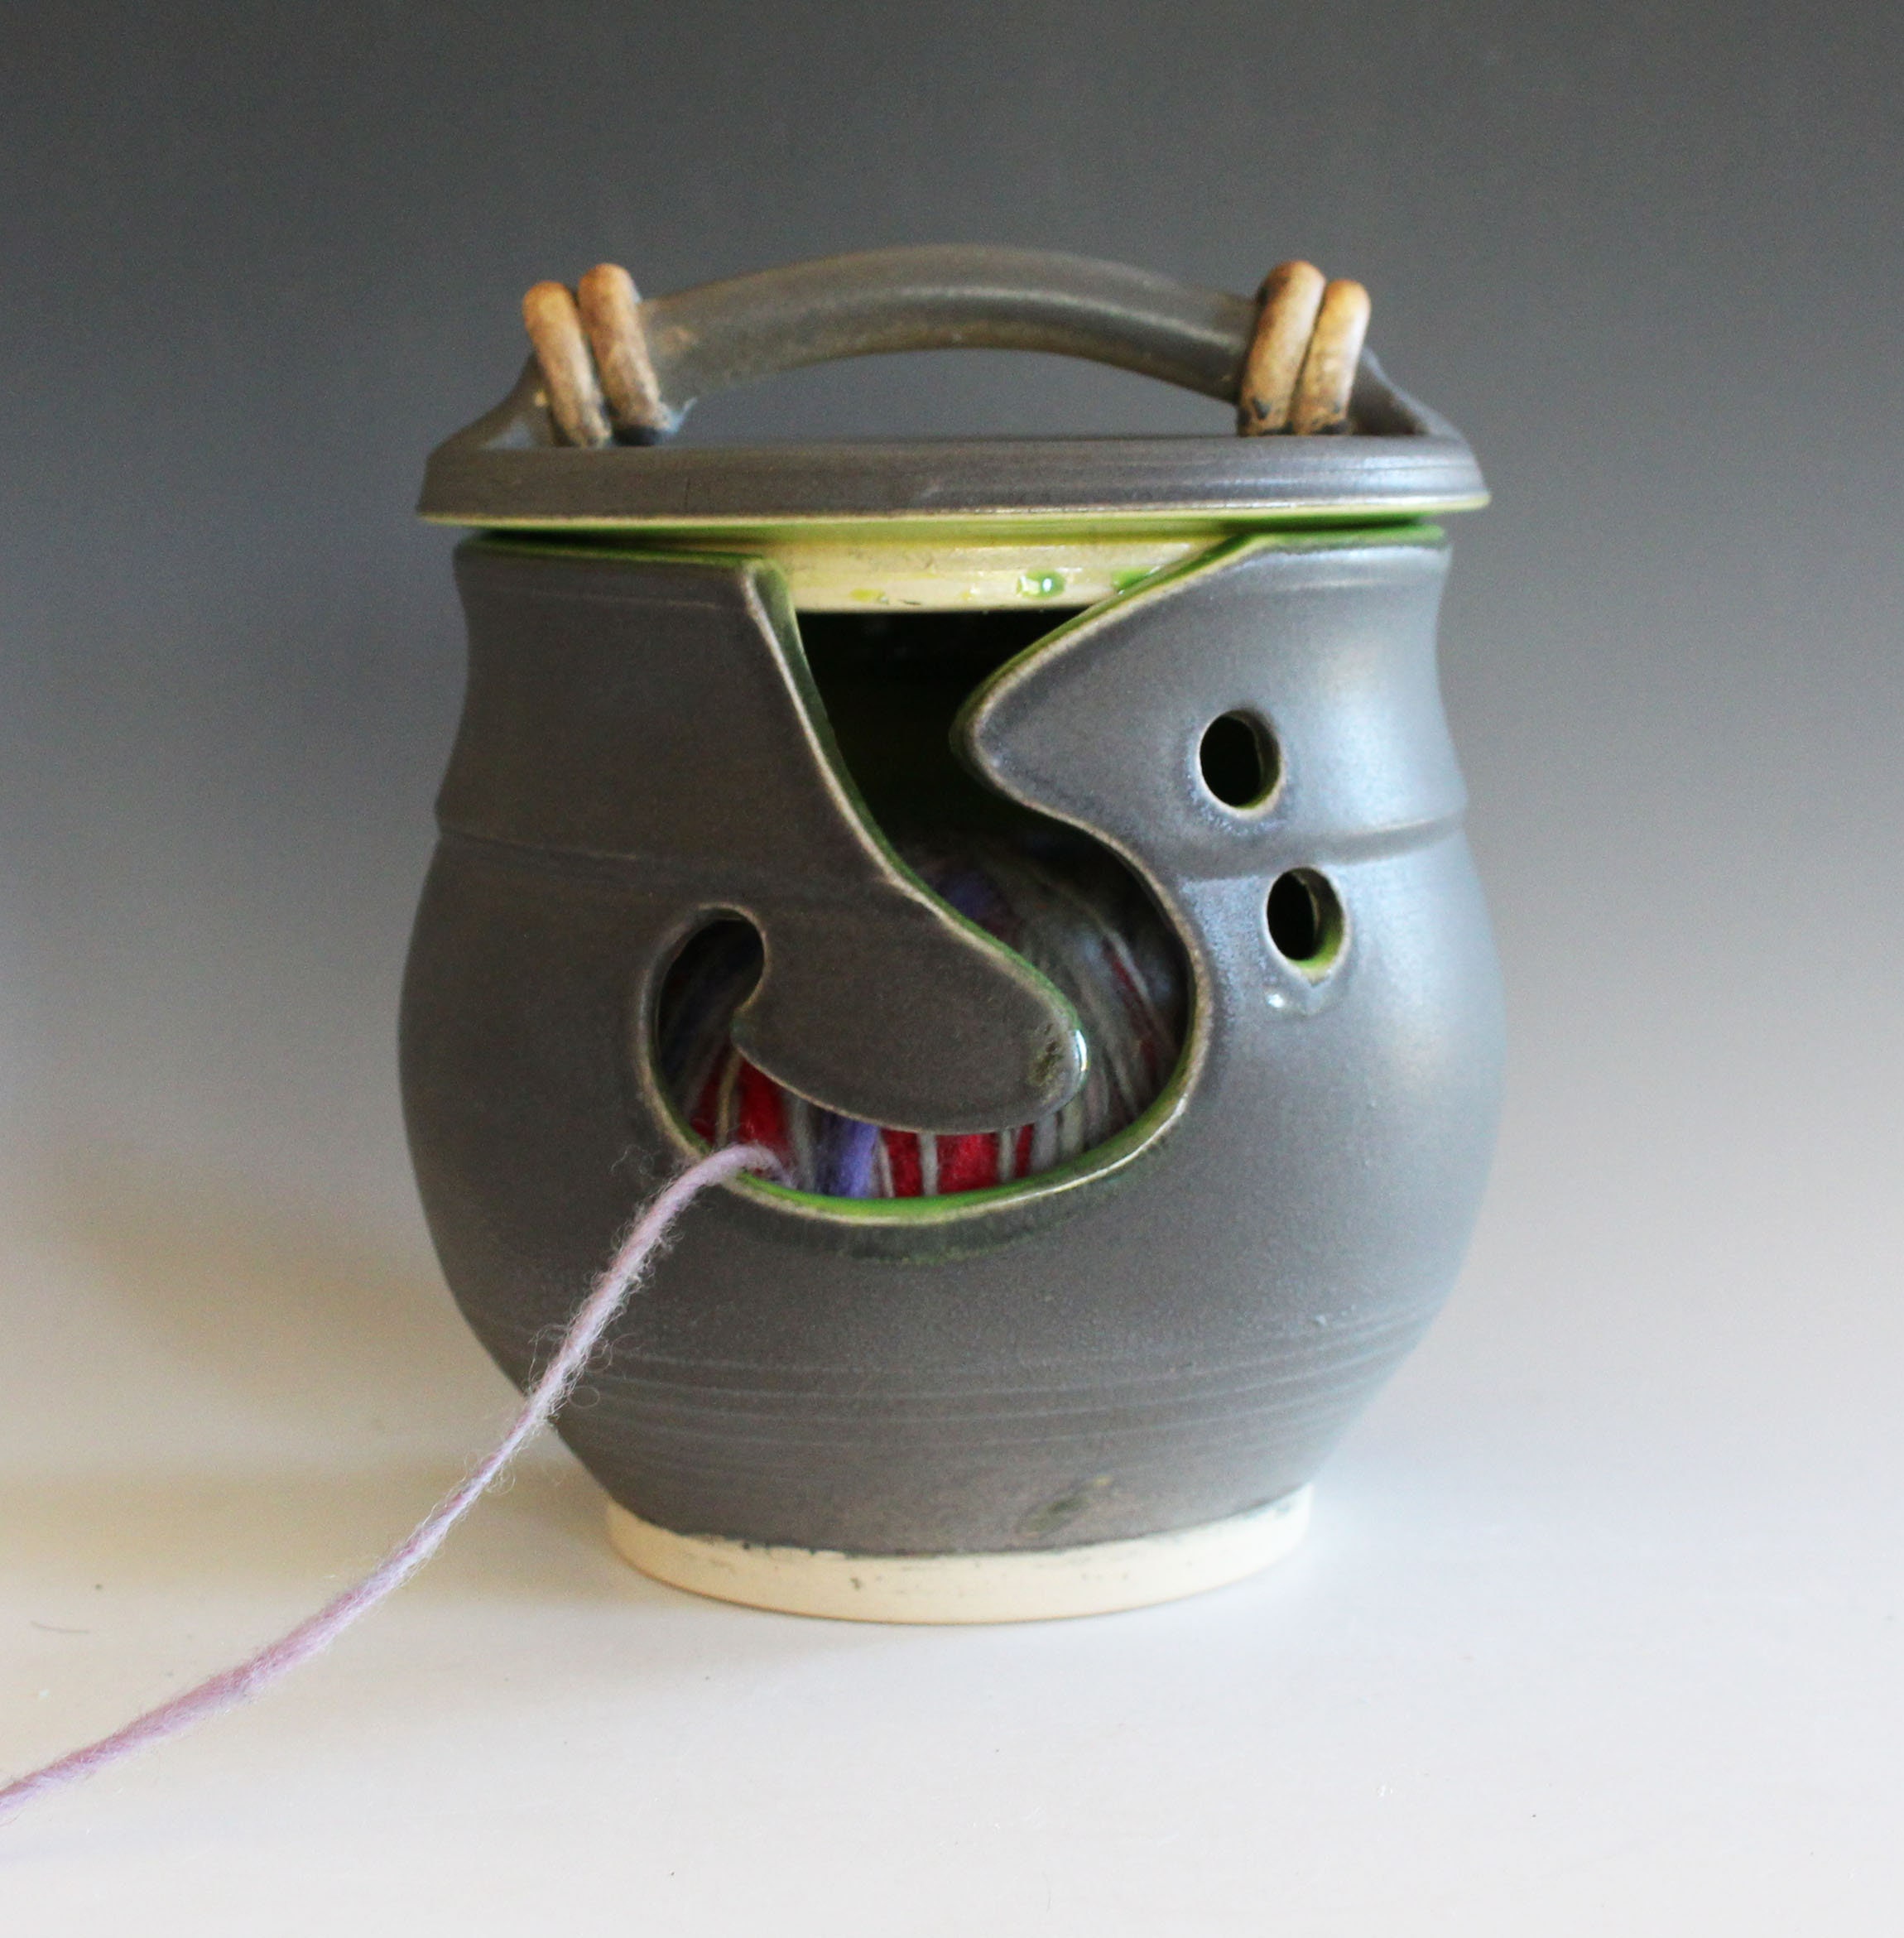 JubileeYarn Bamboo Yarn Bowl with Lid - Holder Knitting Crochet Accessories  - Natural - 1 Box